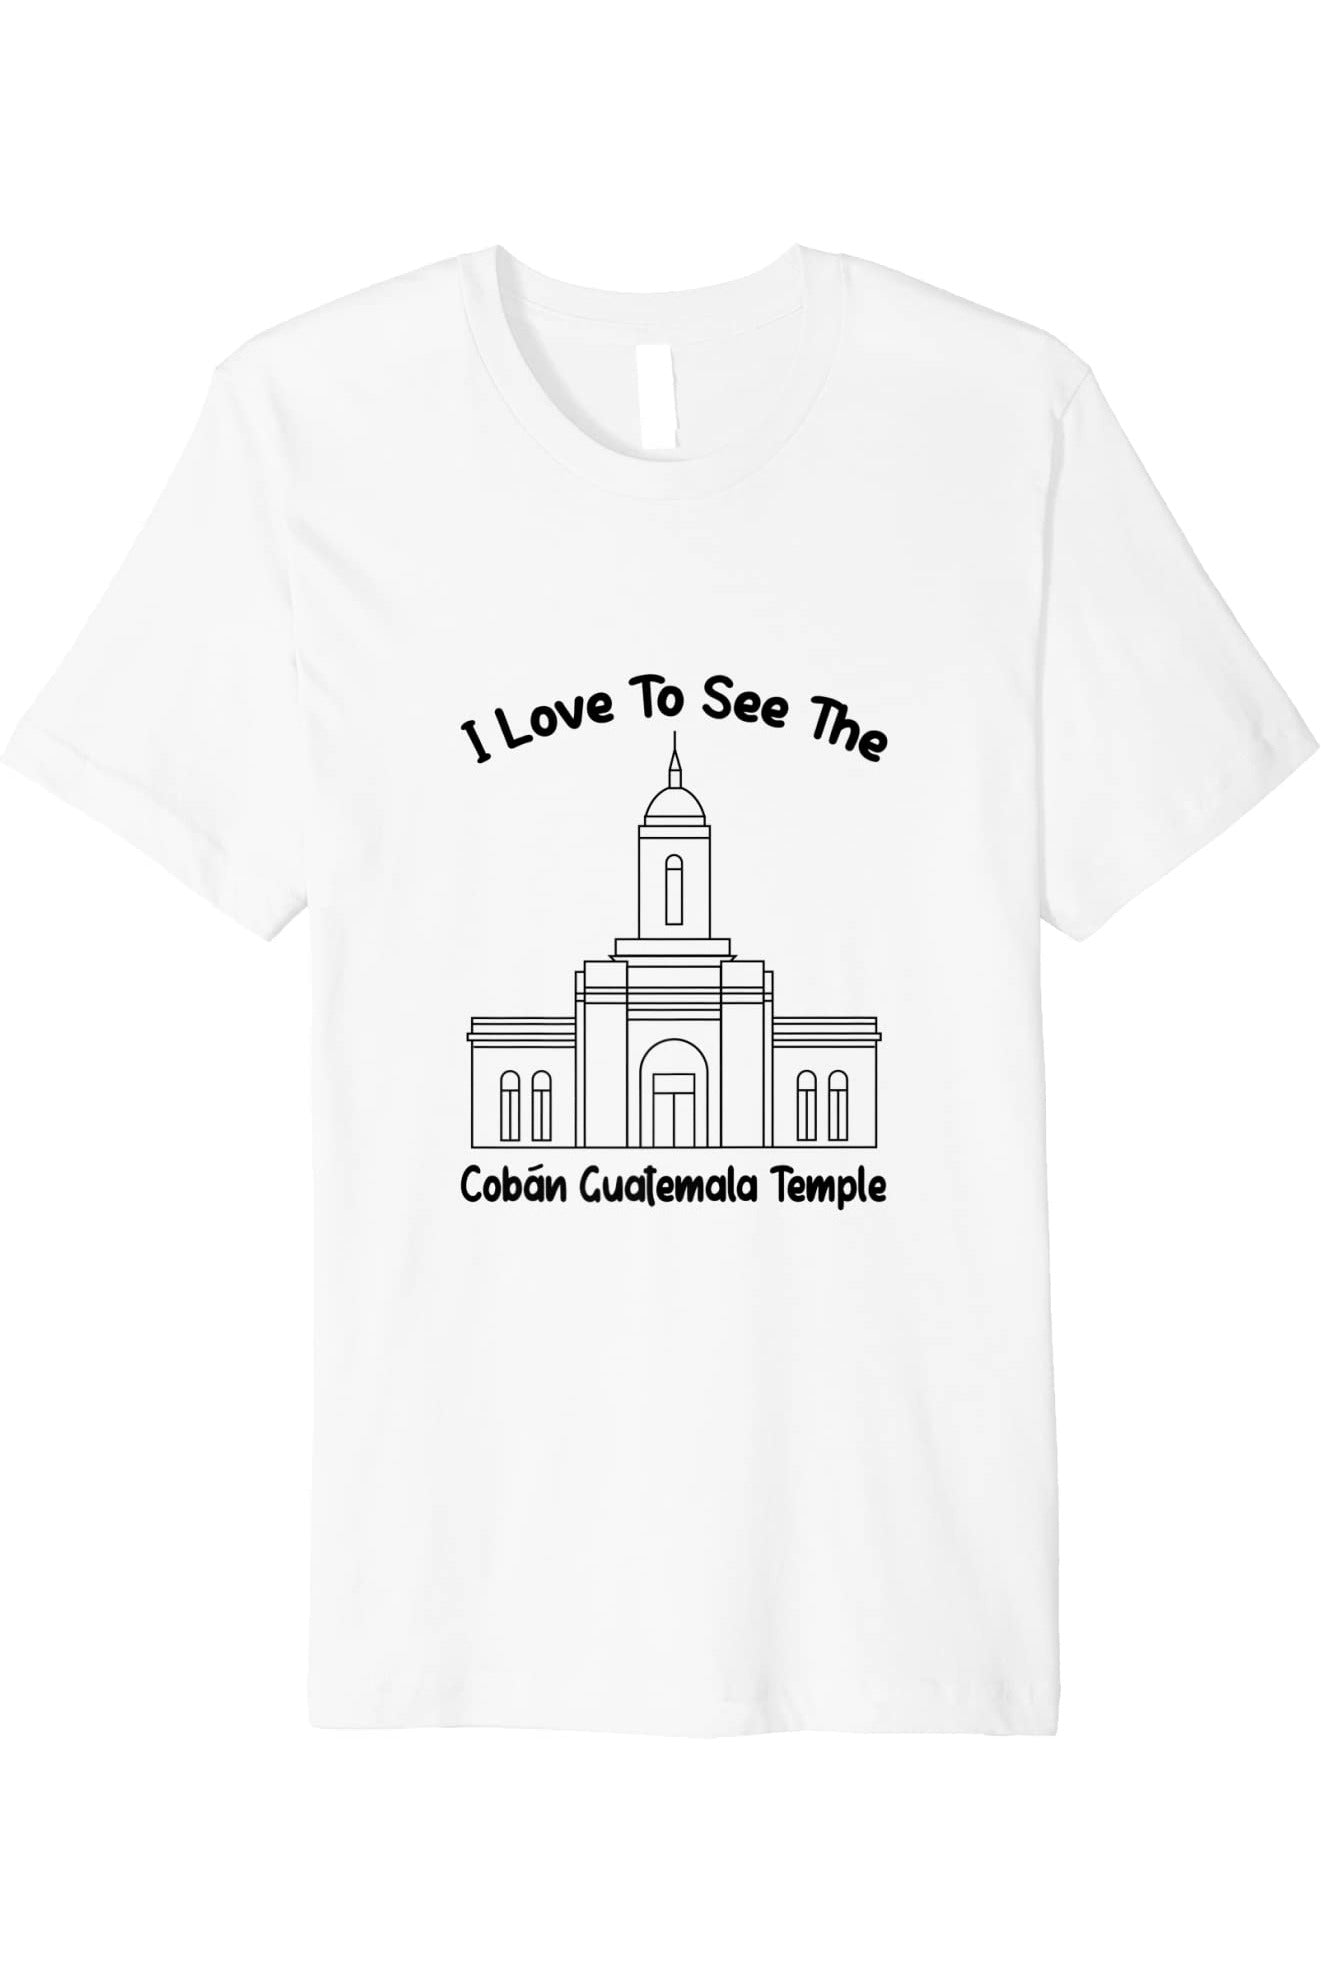 Coban Guatemala Temple T-Shirt - Premium - Primary Style (English) US